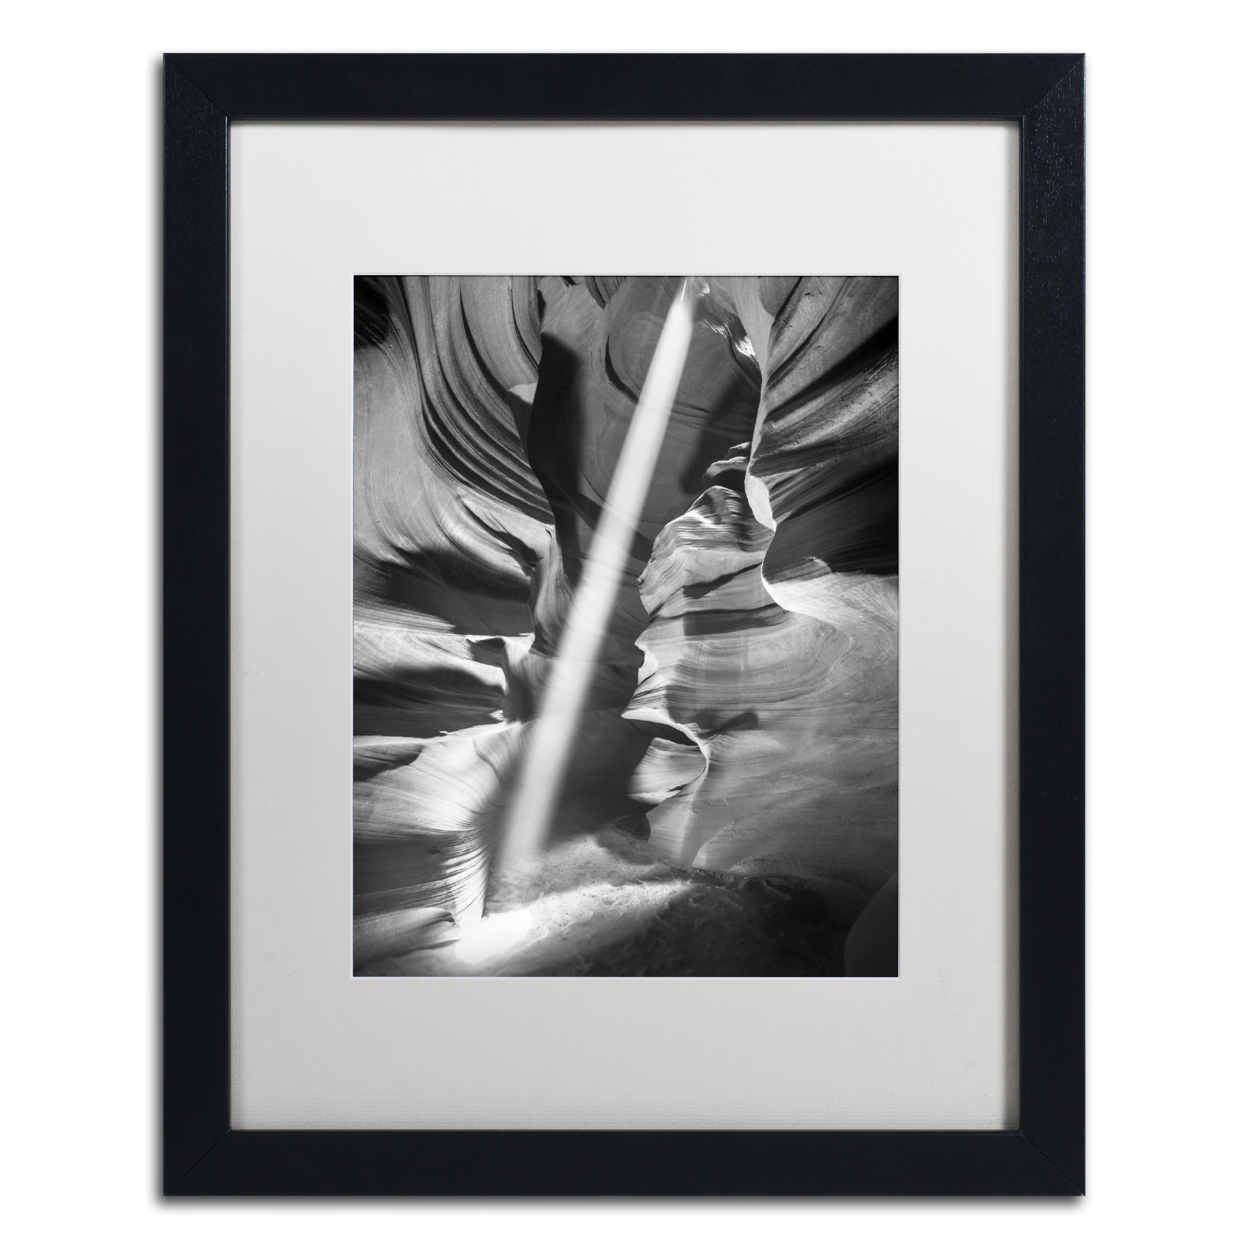 Moises Levy 'Illumination II' Black Wooden Framed Art 18 X 22 Inches